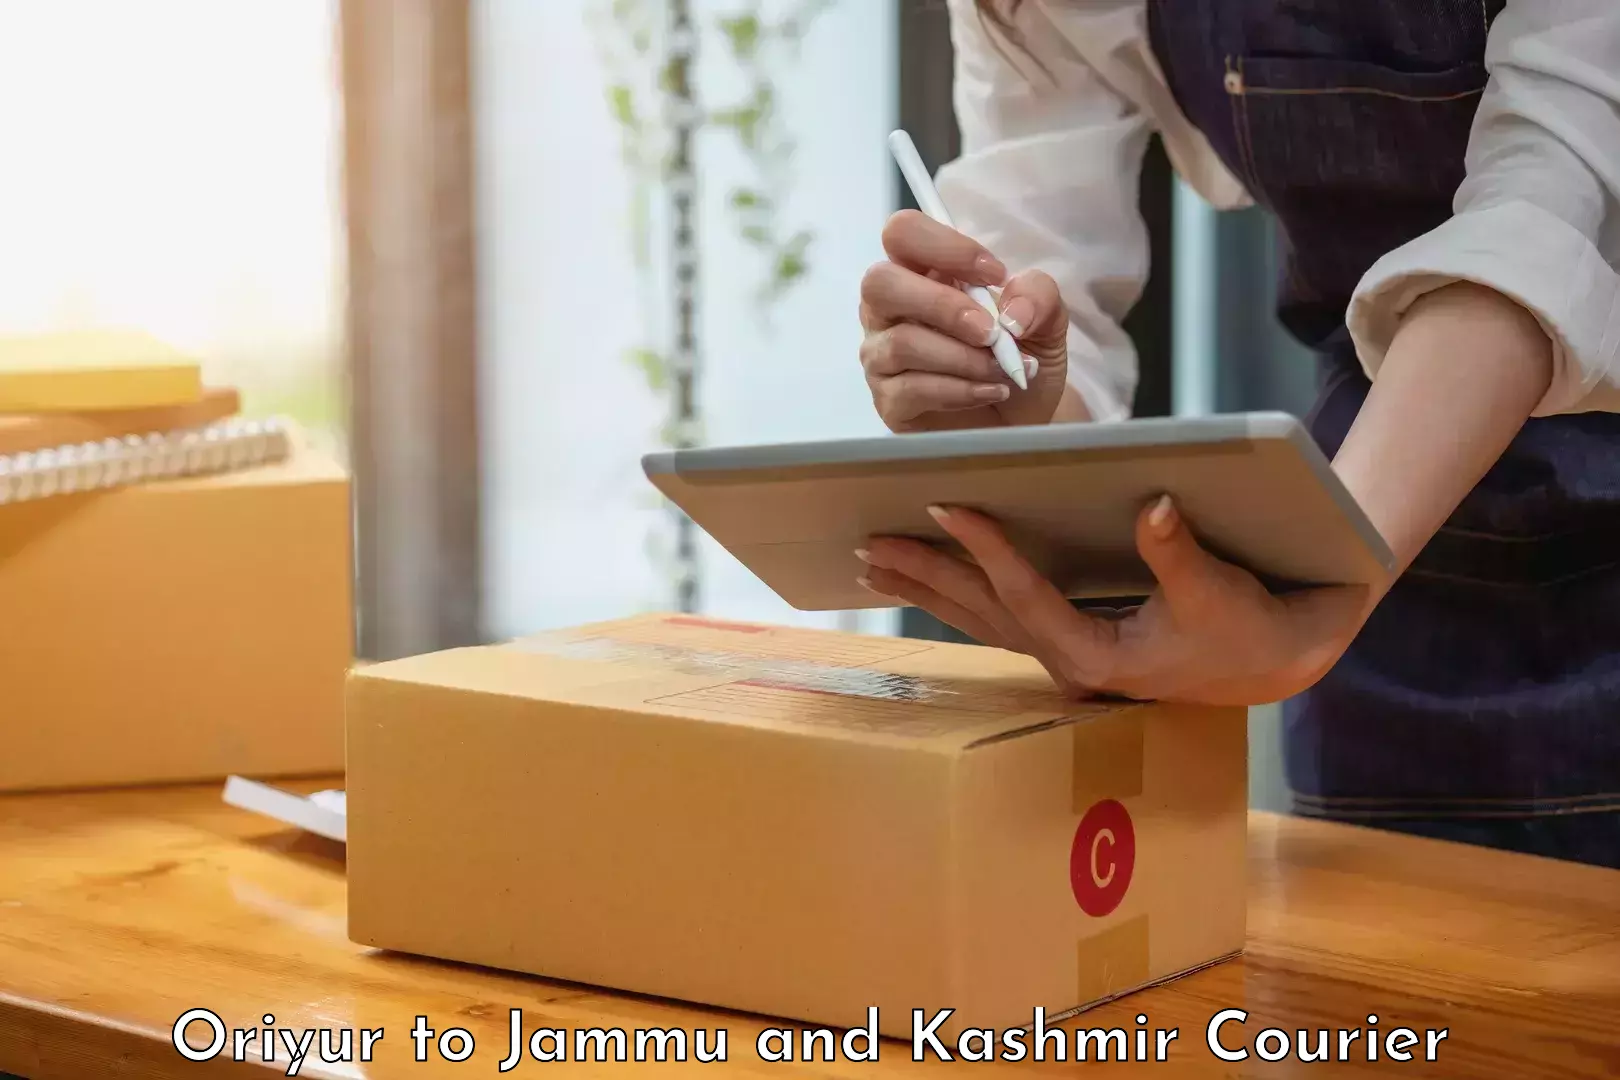 Professional courier handling Oriyur to Jammu